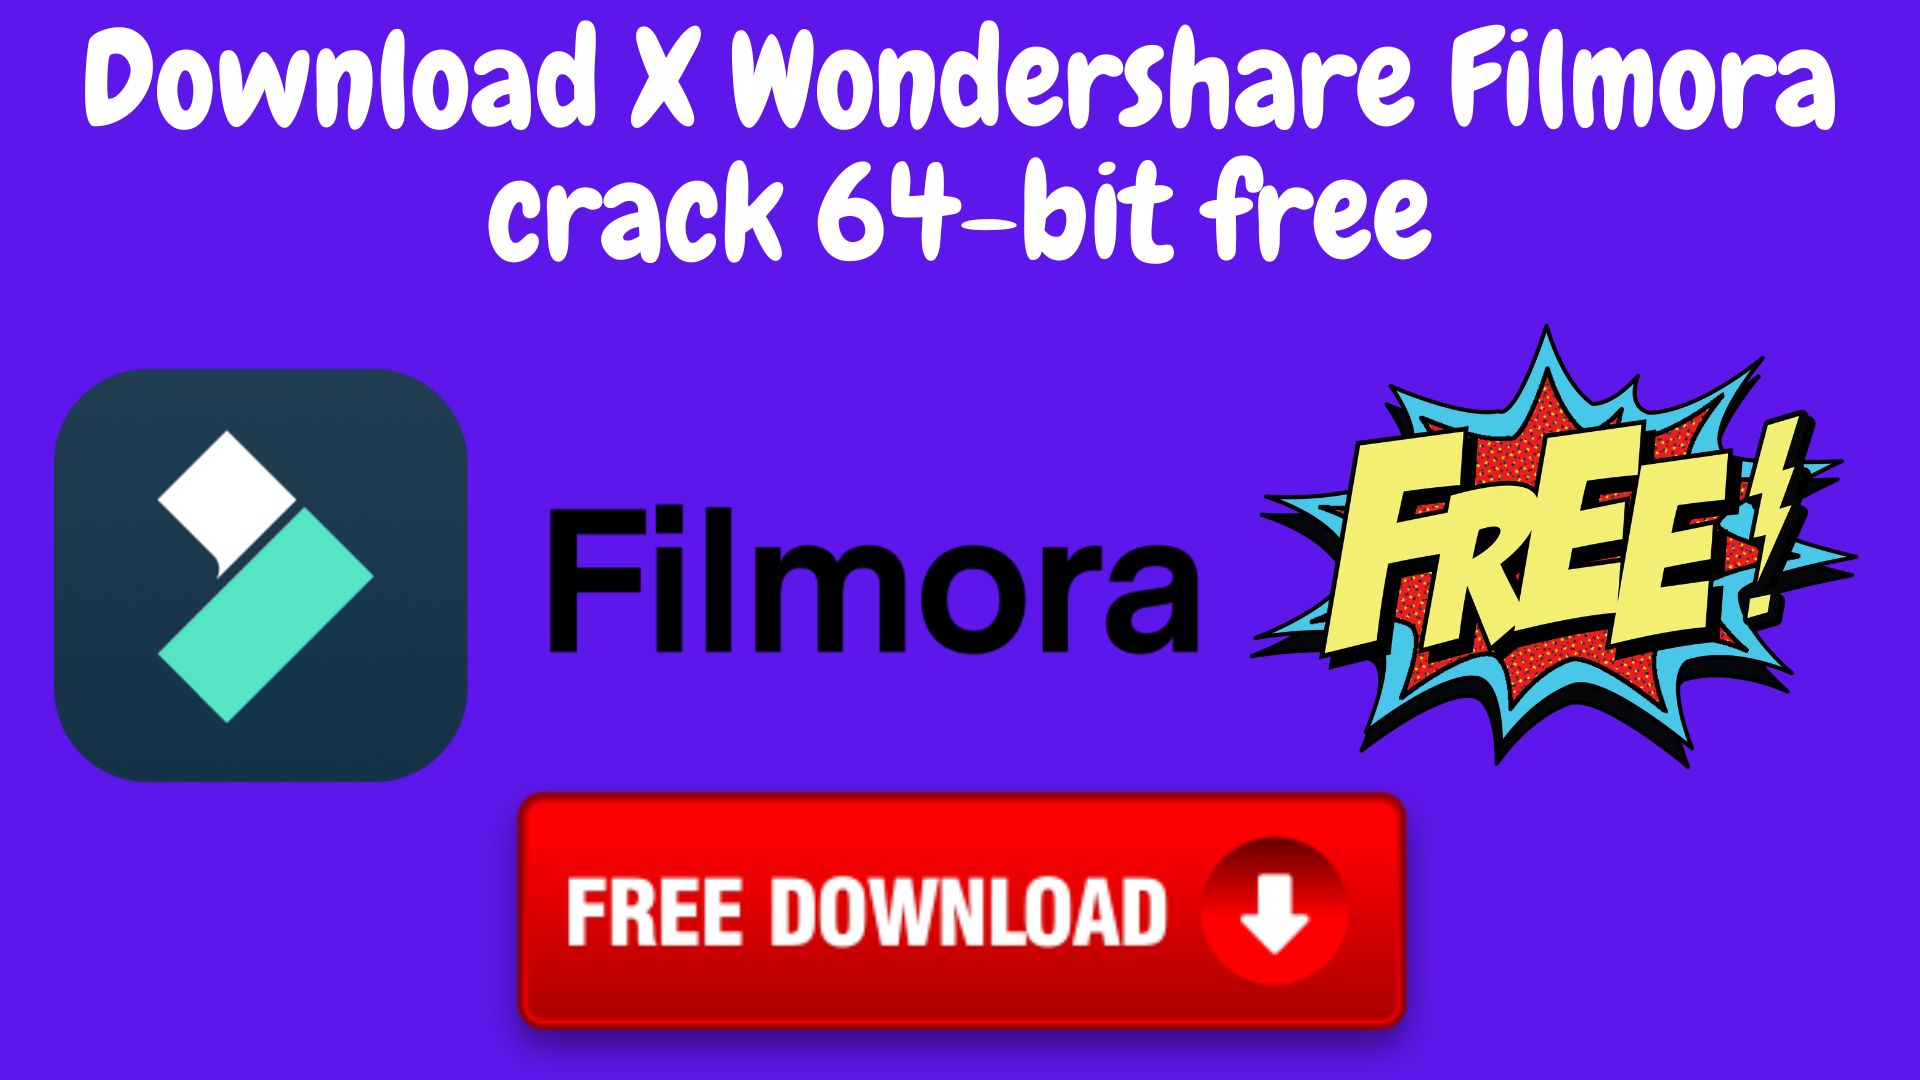 Download x wondershare filmora crack 64-bit free